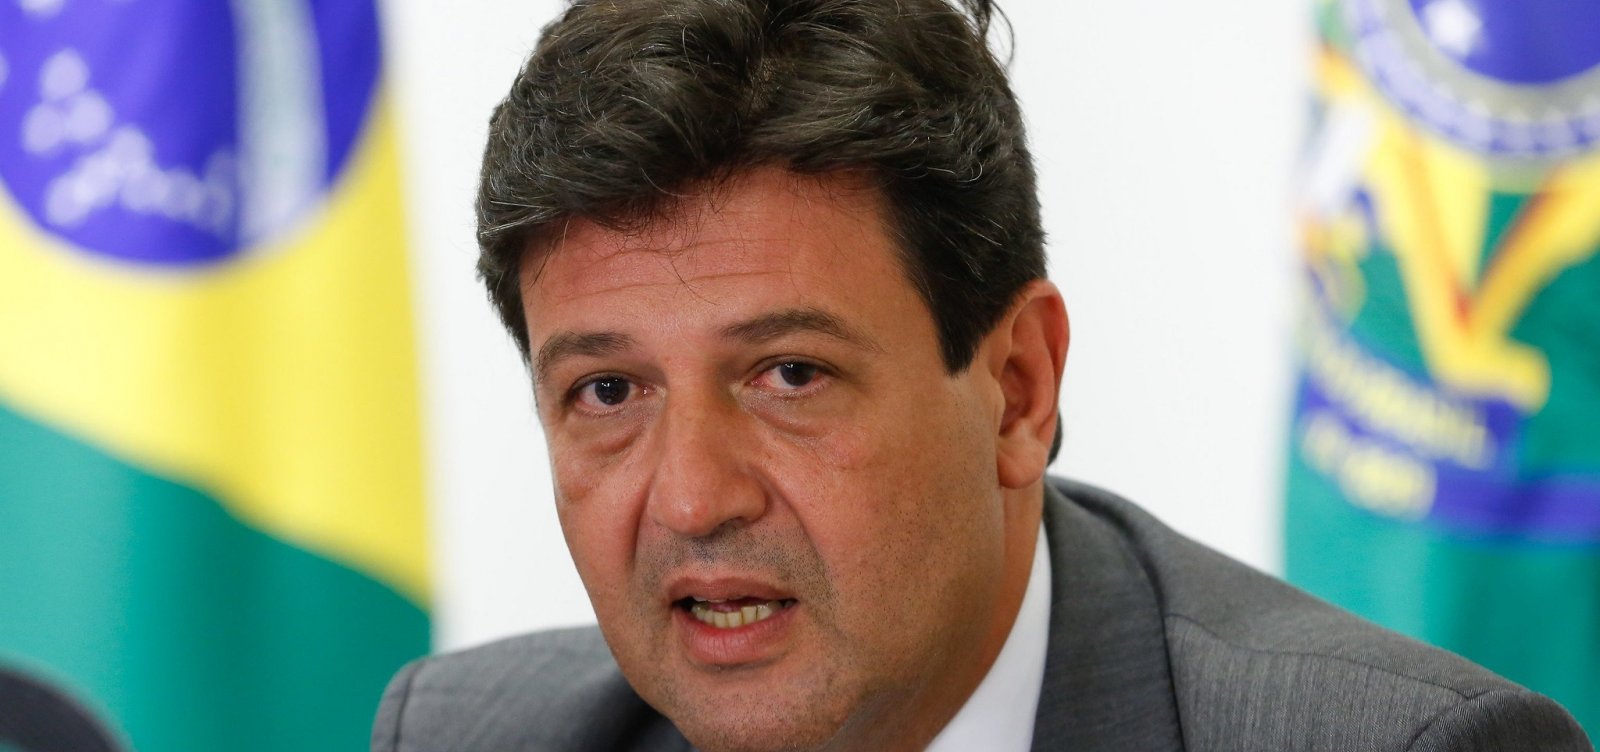 Após DEM se aproximar de Bolsonaro, Mandetta avalia deixar sigla